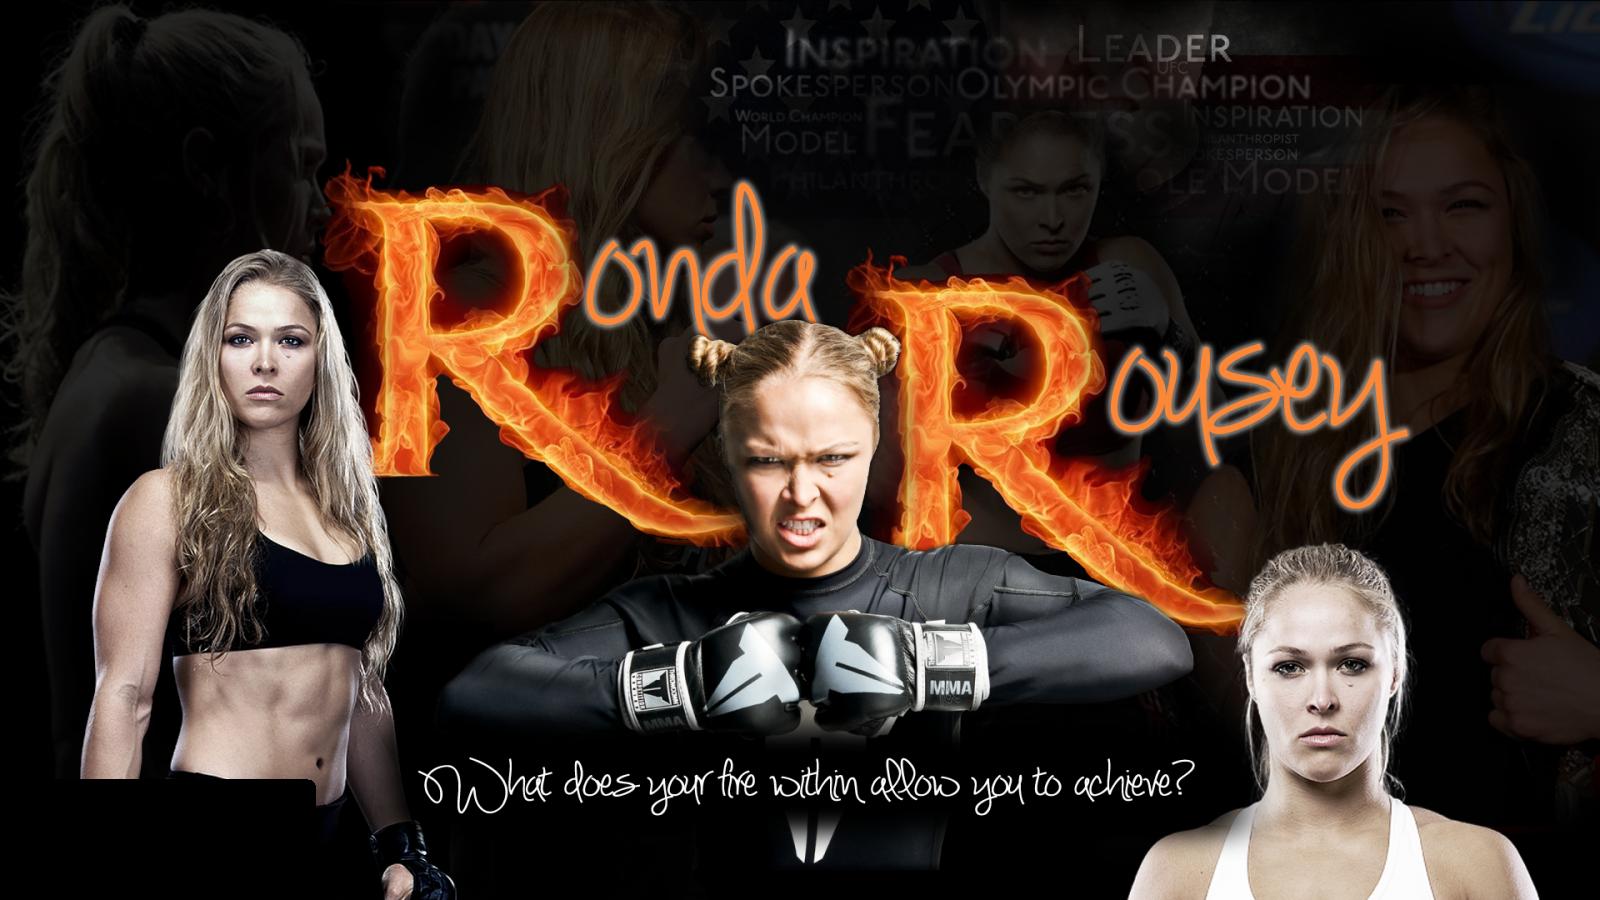 Ronda Rousey Poster Wallpaper